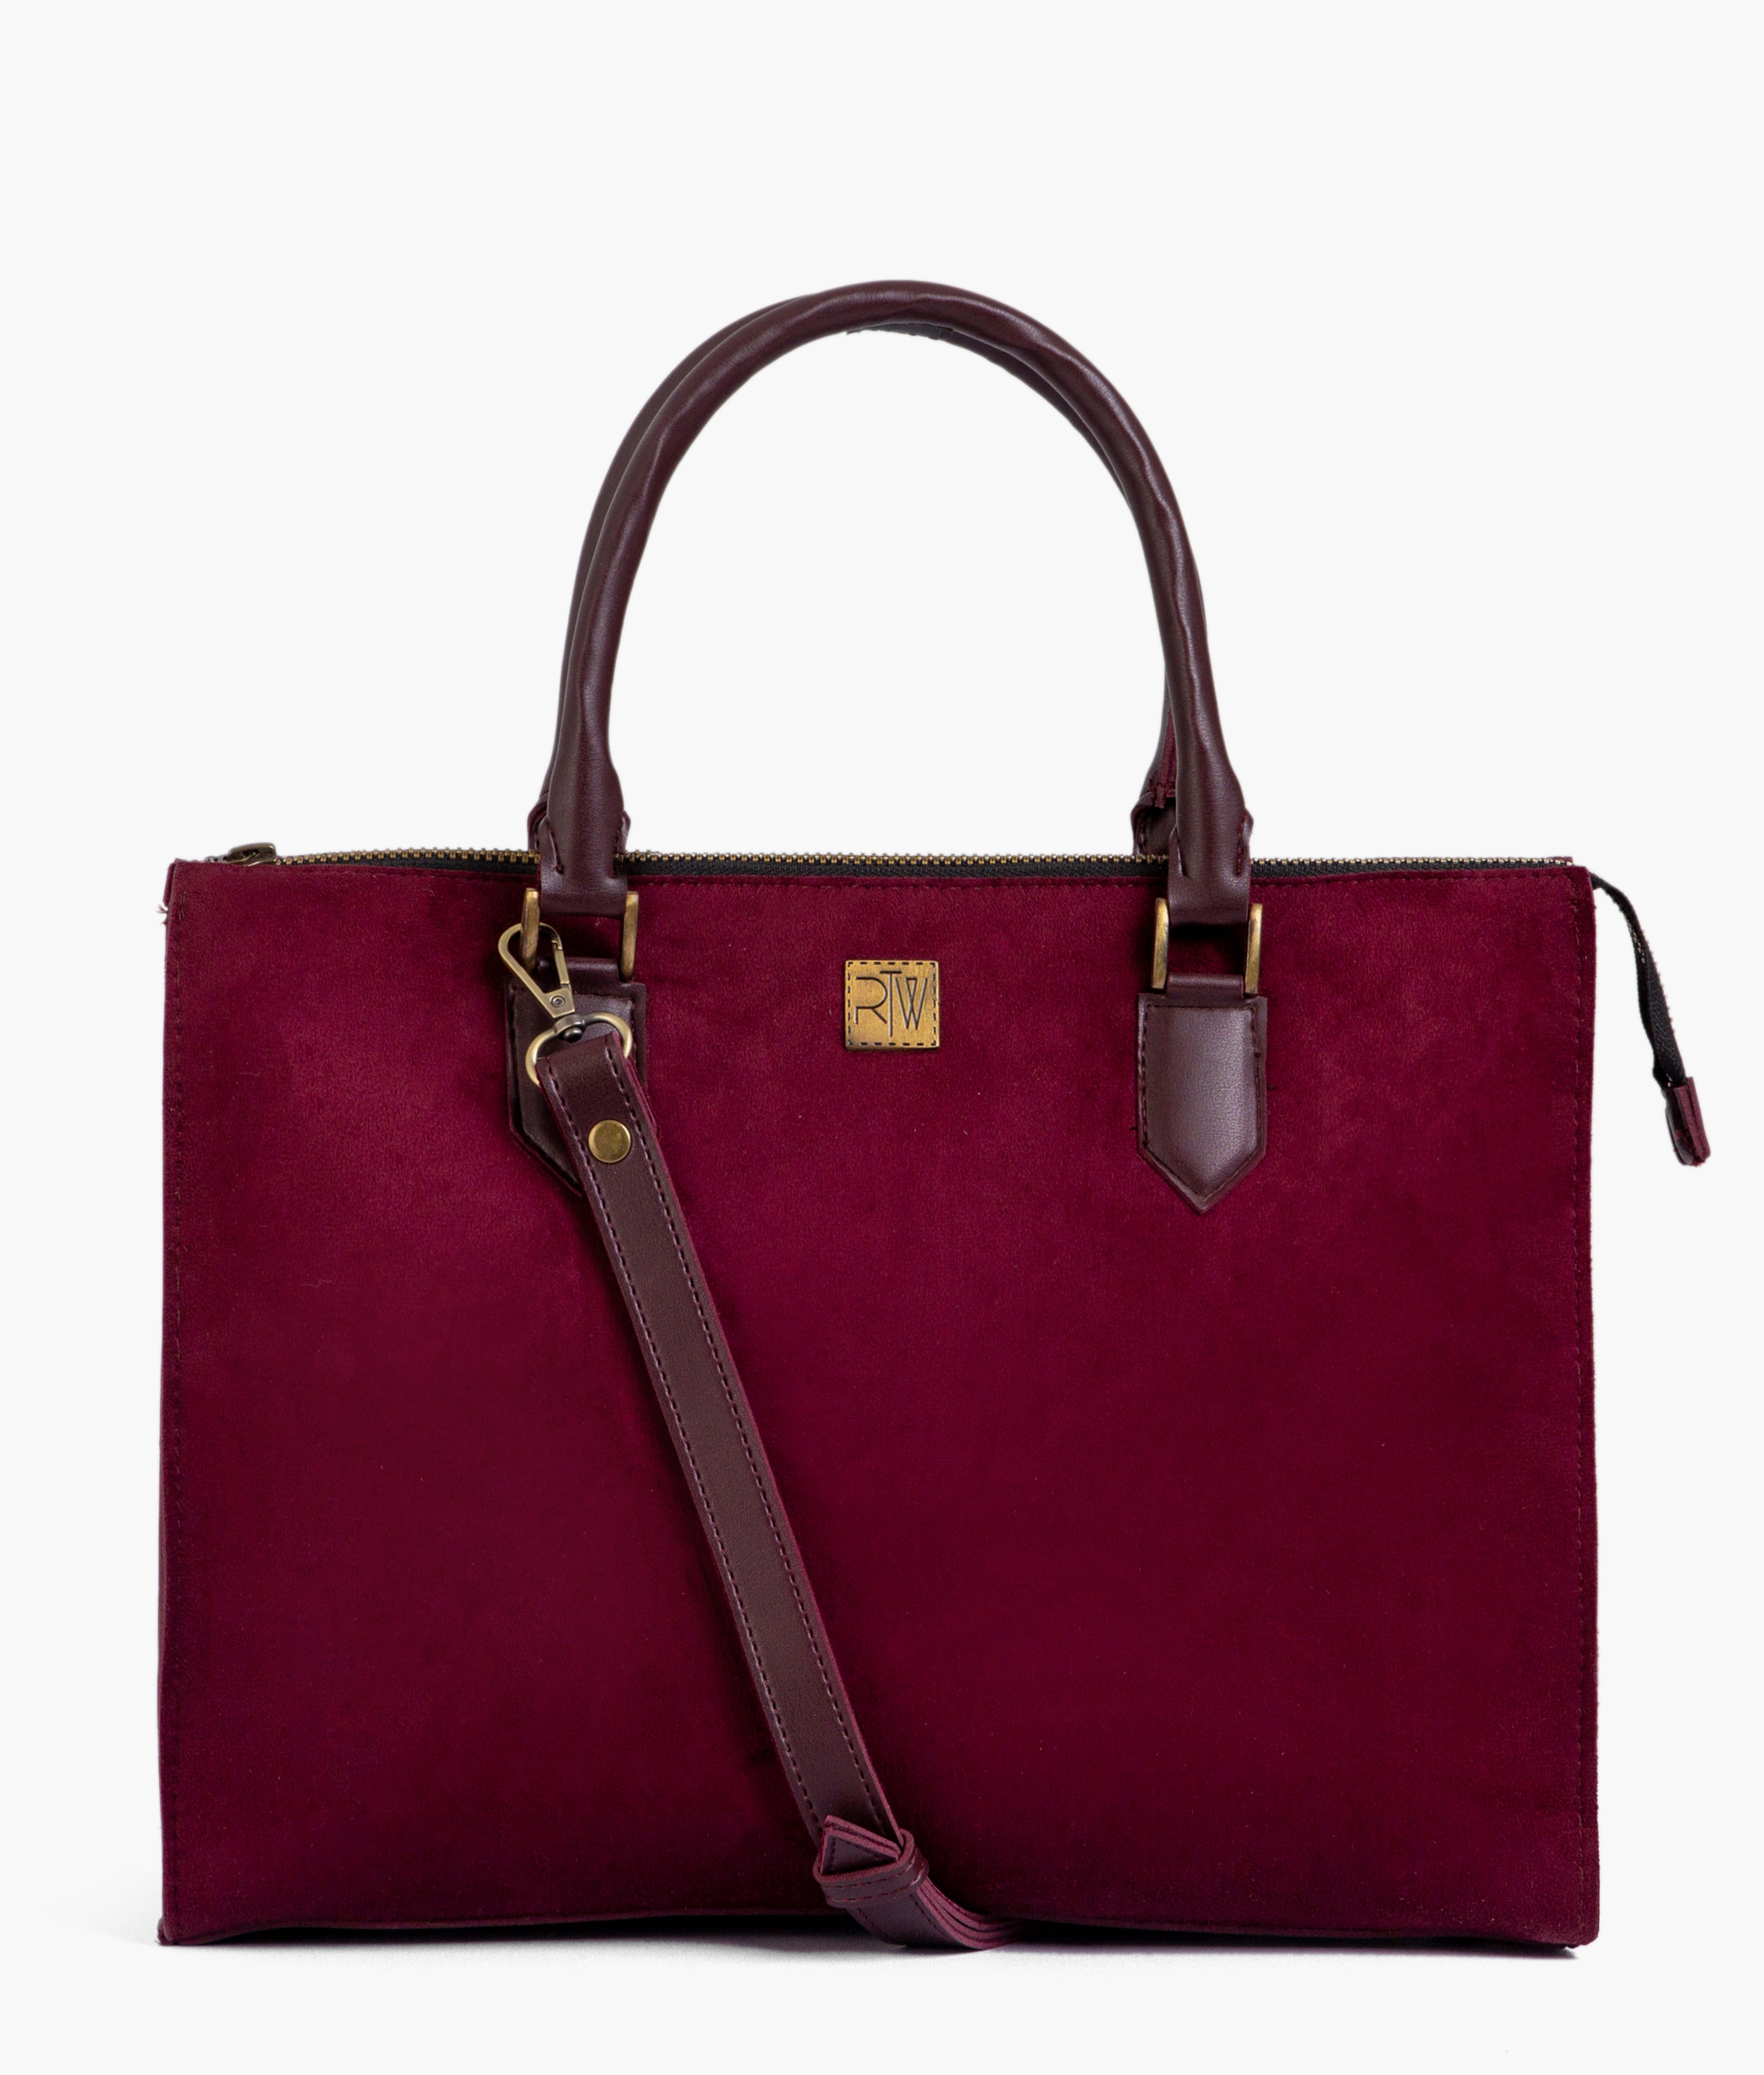 Burgundy suede workplace handbag